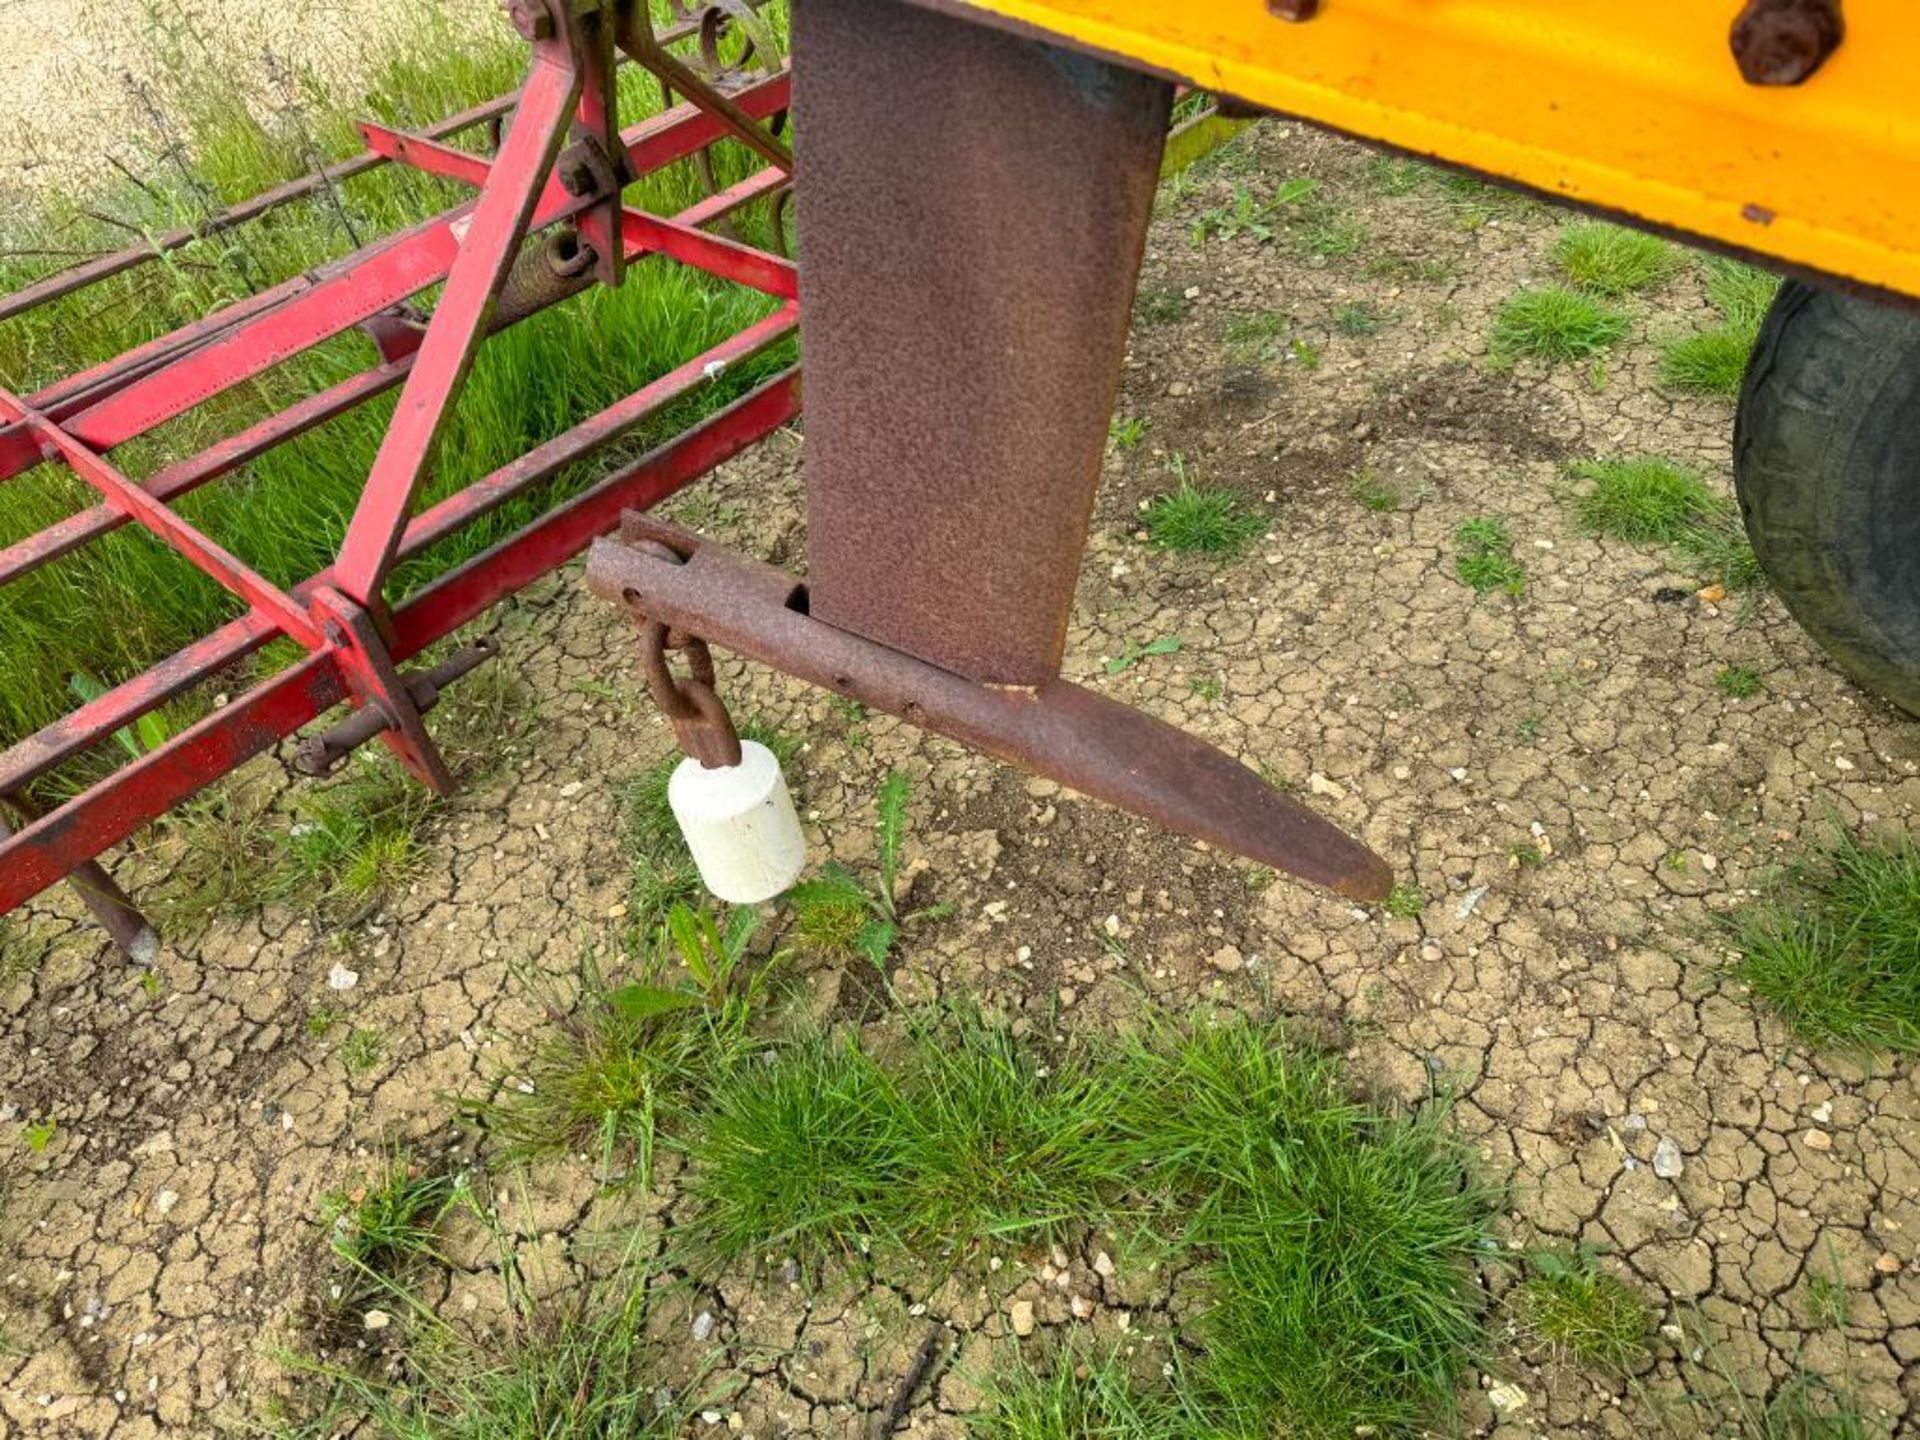 Miles single leg mole plough, trailed. Serial No: 3326 - Image 2 of 3